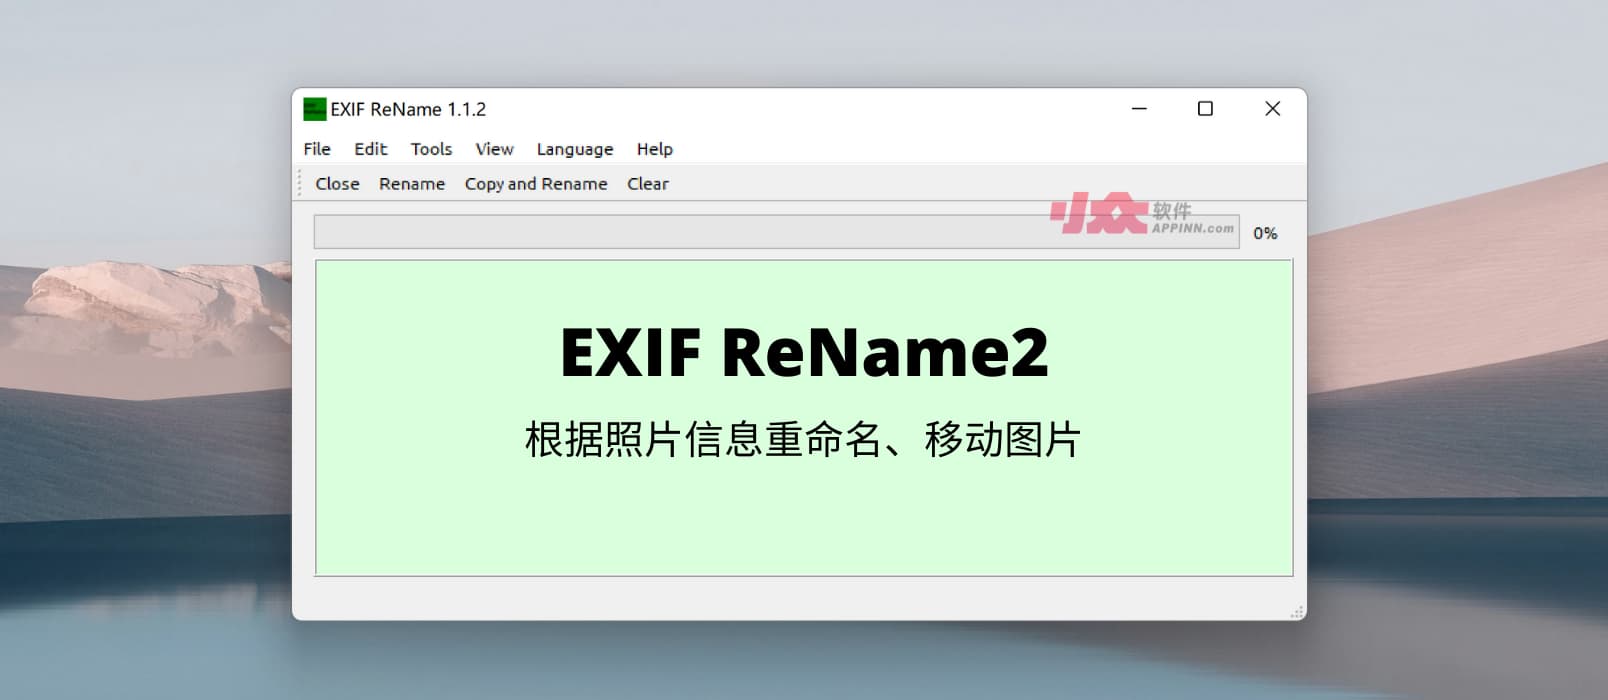 EXIF ReName 2 - 根据照片信息重命名、复制图片[Windows/Linux]